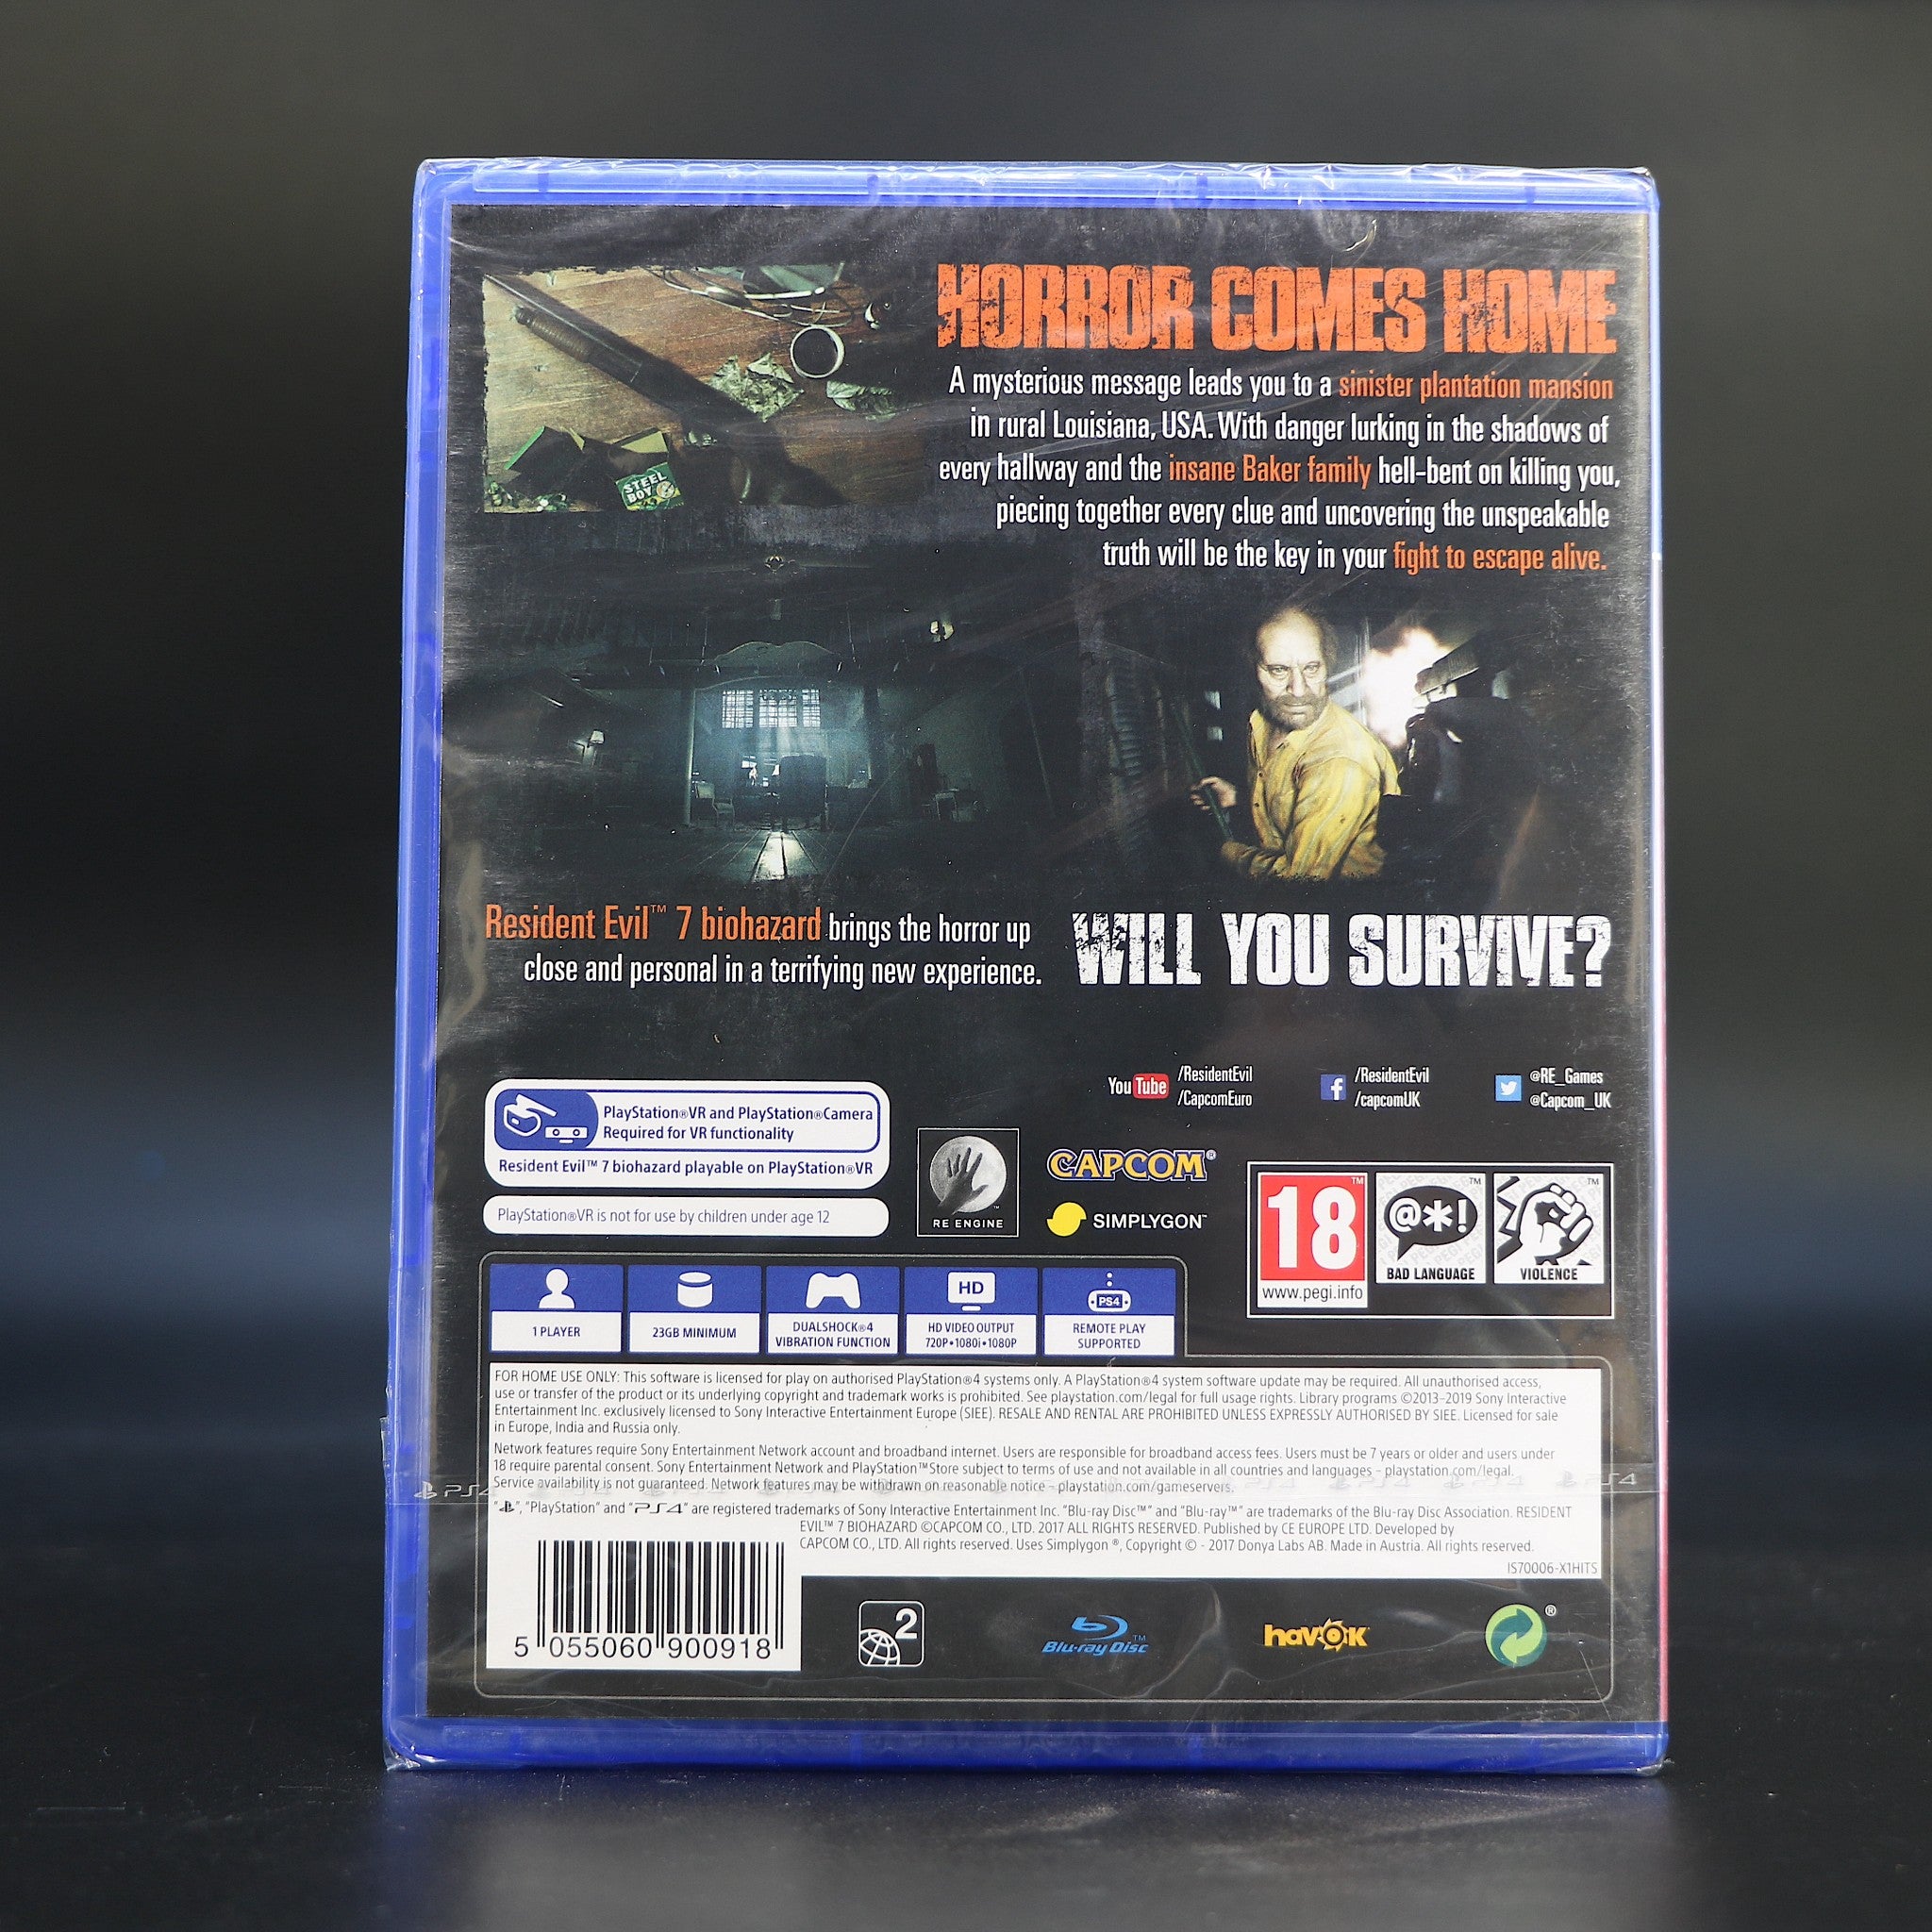 Resident Evil | Biohazard VII 7 | Sony PlayStation VR 4 PS4 Game | New & Sealed